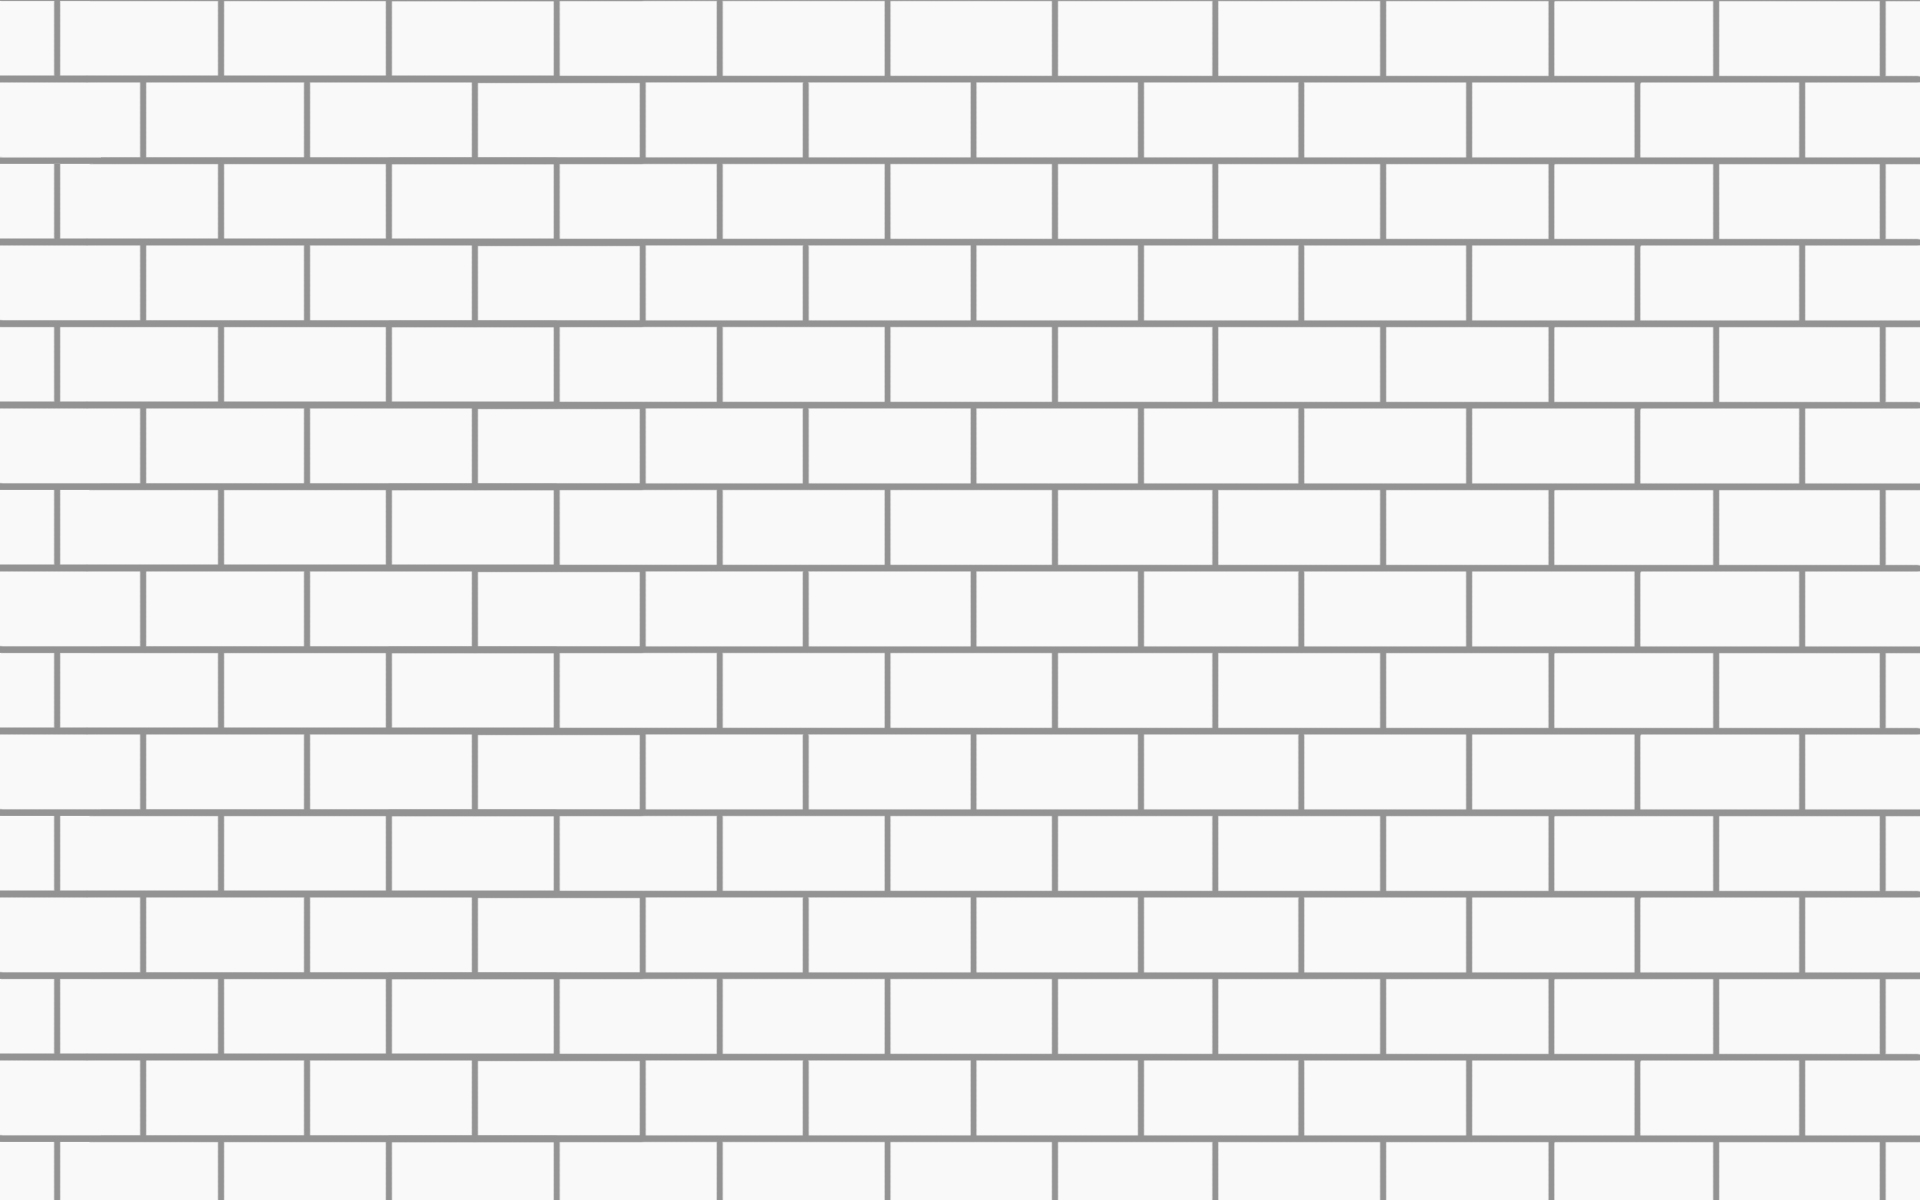 Pink Floyd, Pink Floyd The Wall, The Wall - обои на рабочий стол